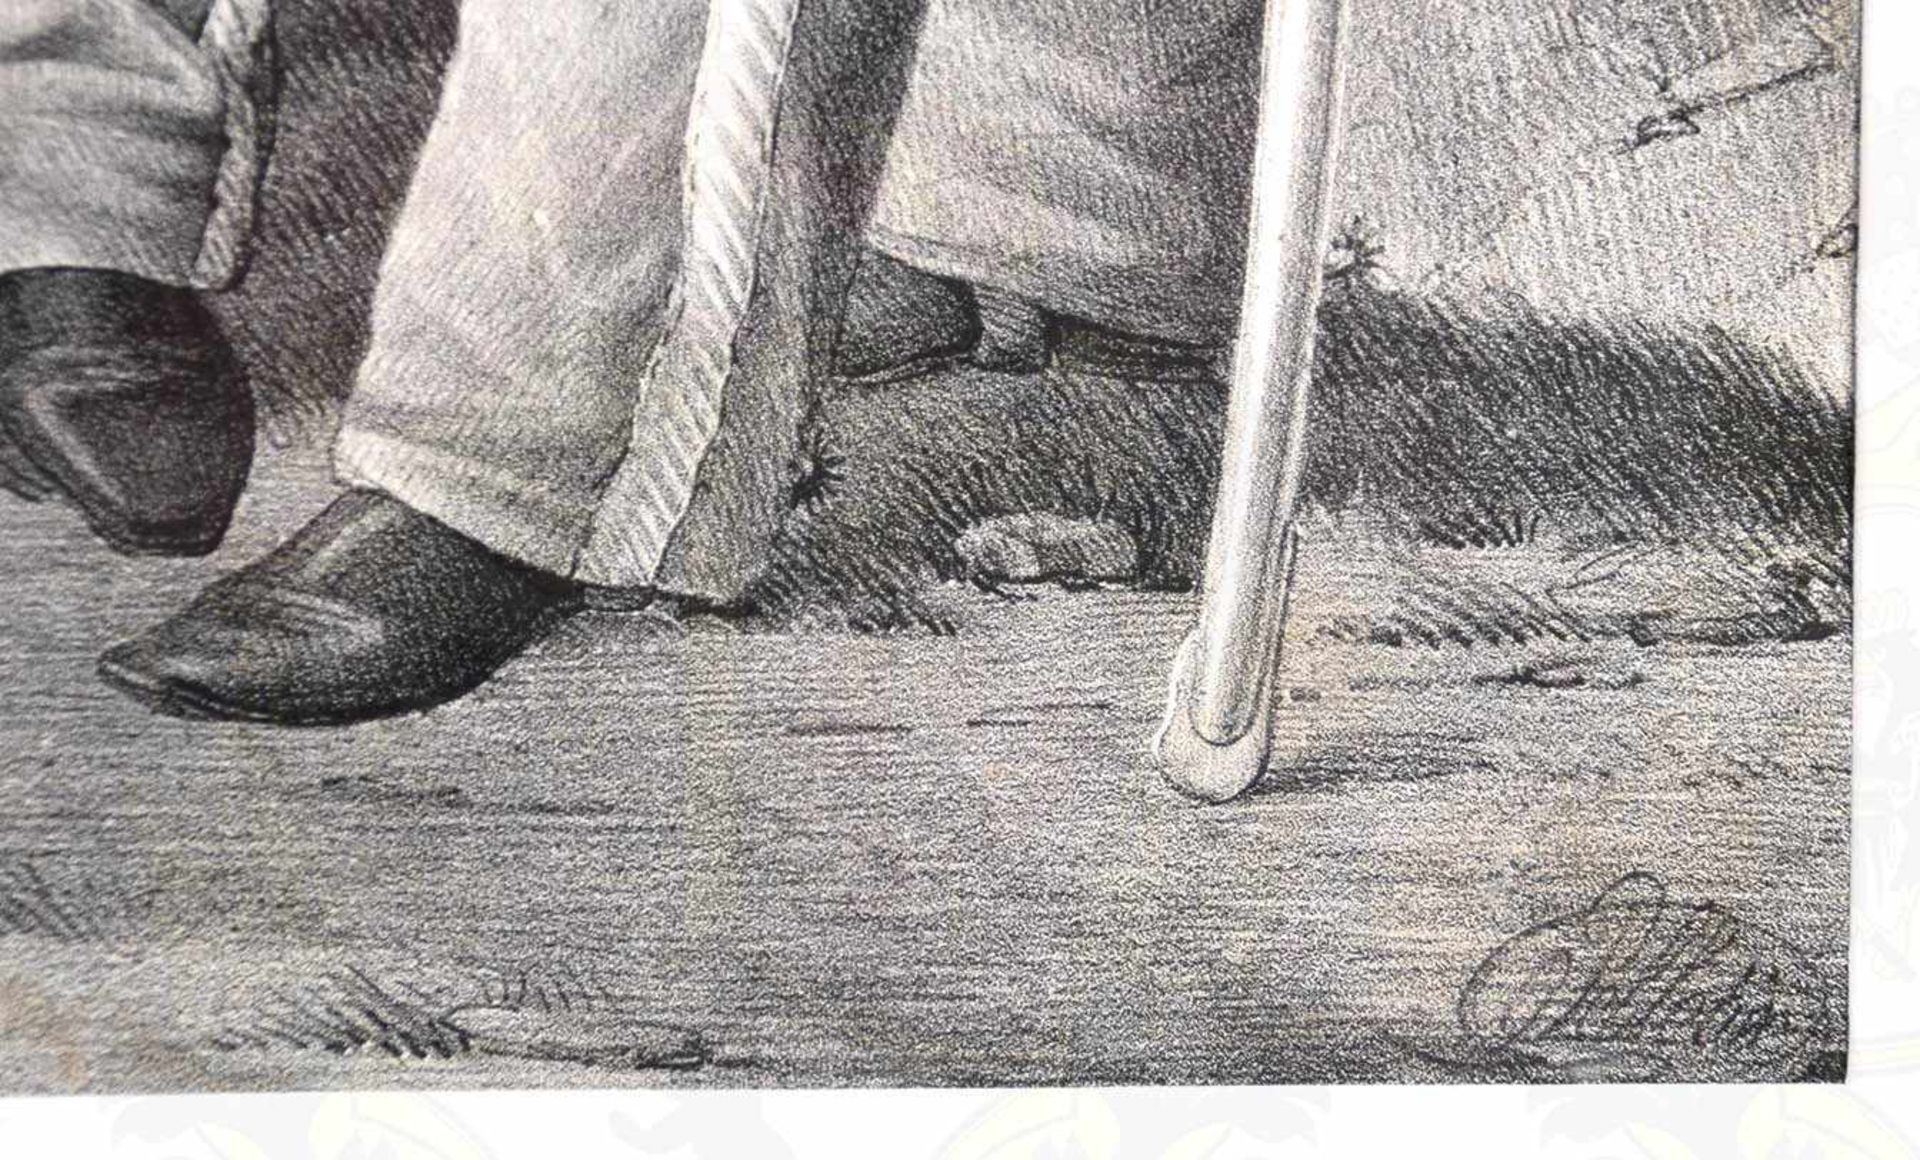 LITHOGRAPHIE FEBRUARREVOLUTION 1848, v. J. L. Pelletier (1811-1892 Aquarellist u. Lithograph), - Bild 2 aus 2